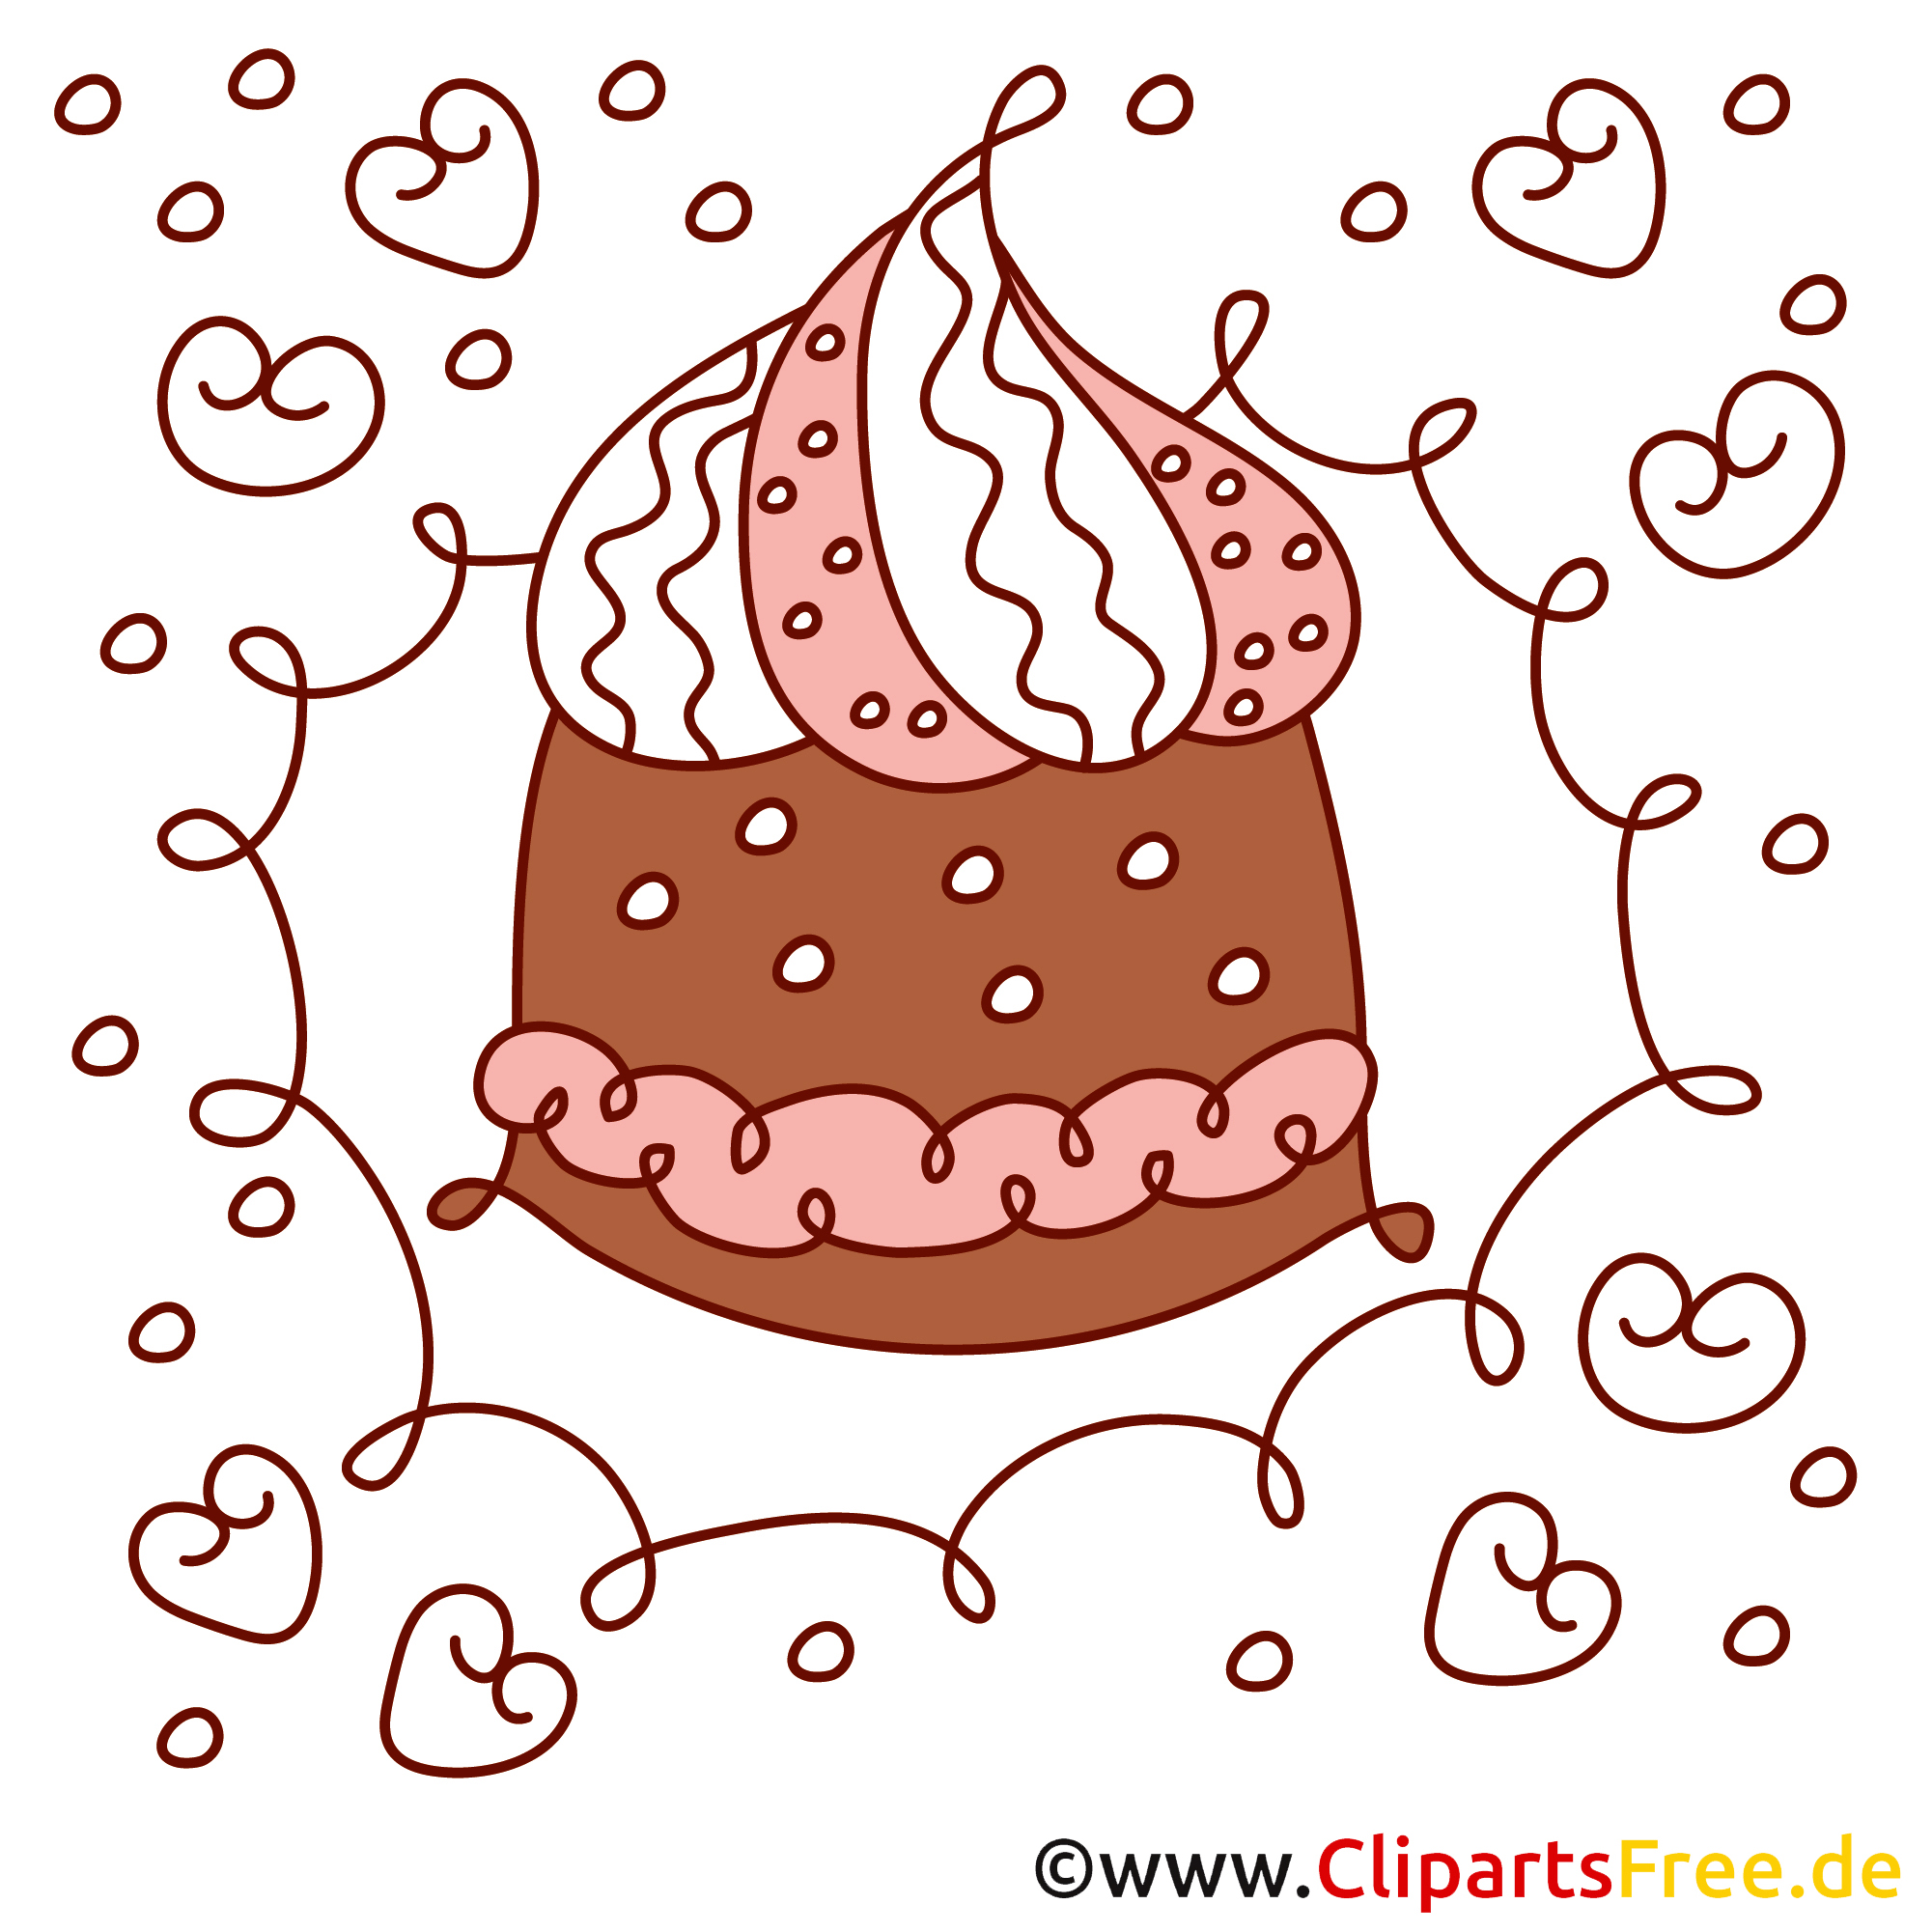 clipart torte gratis - photo #17